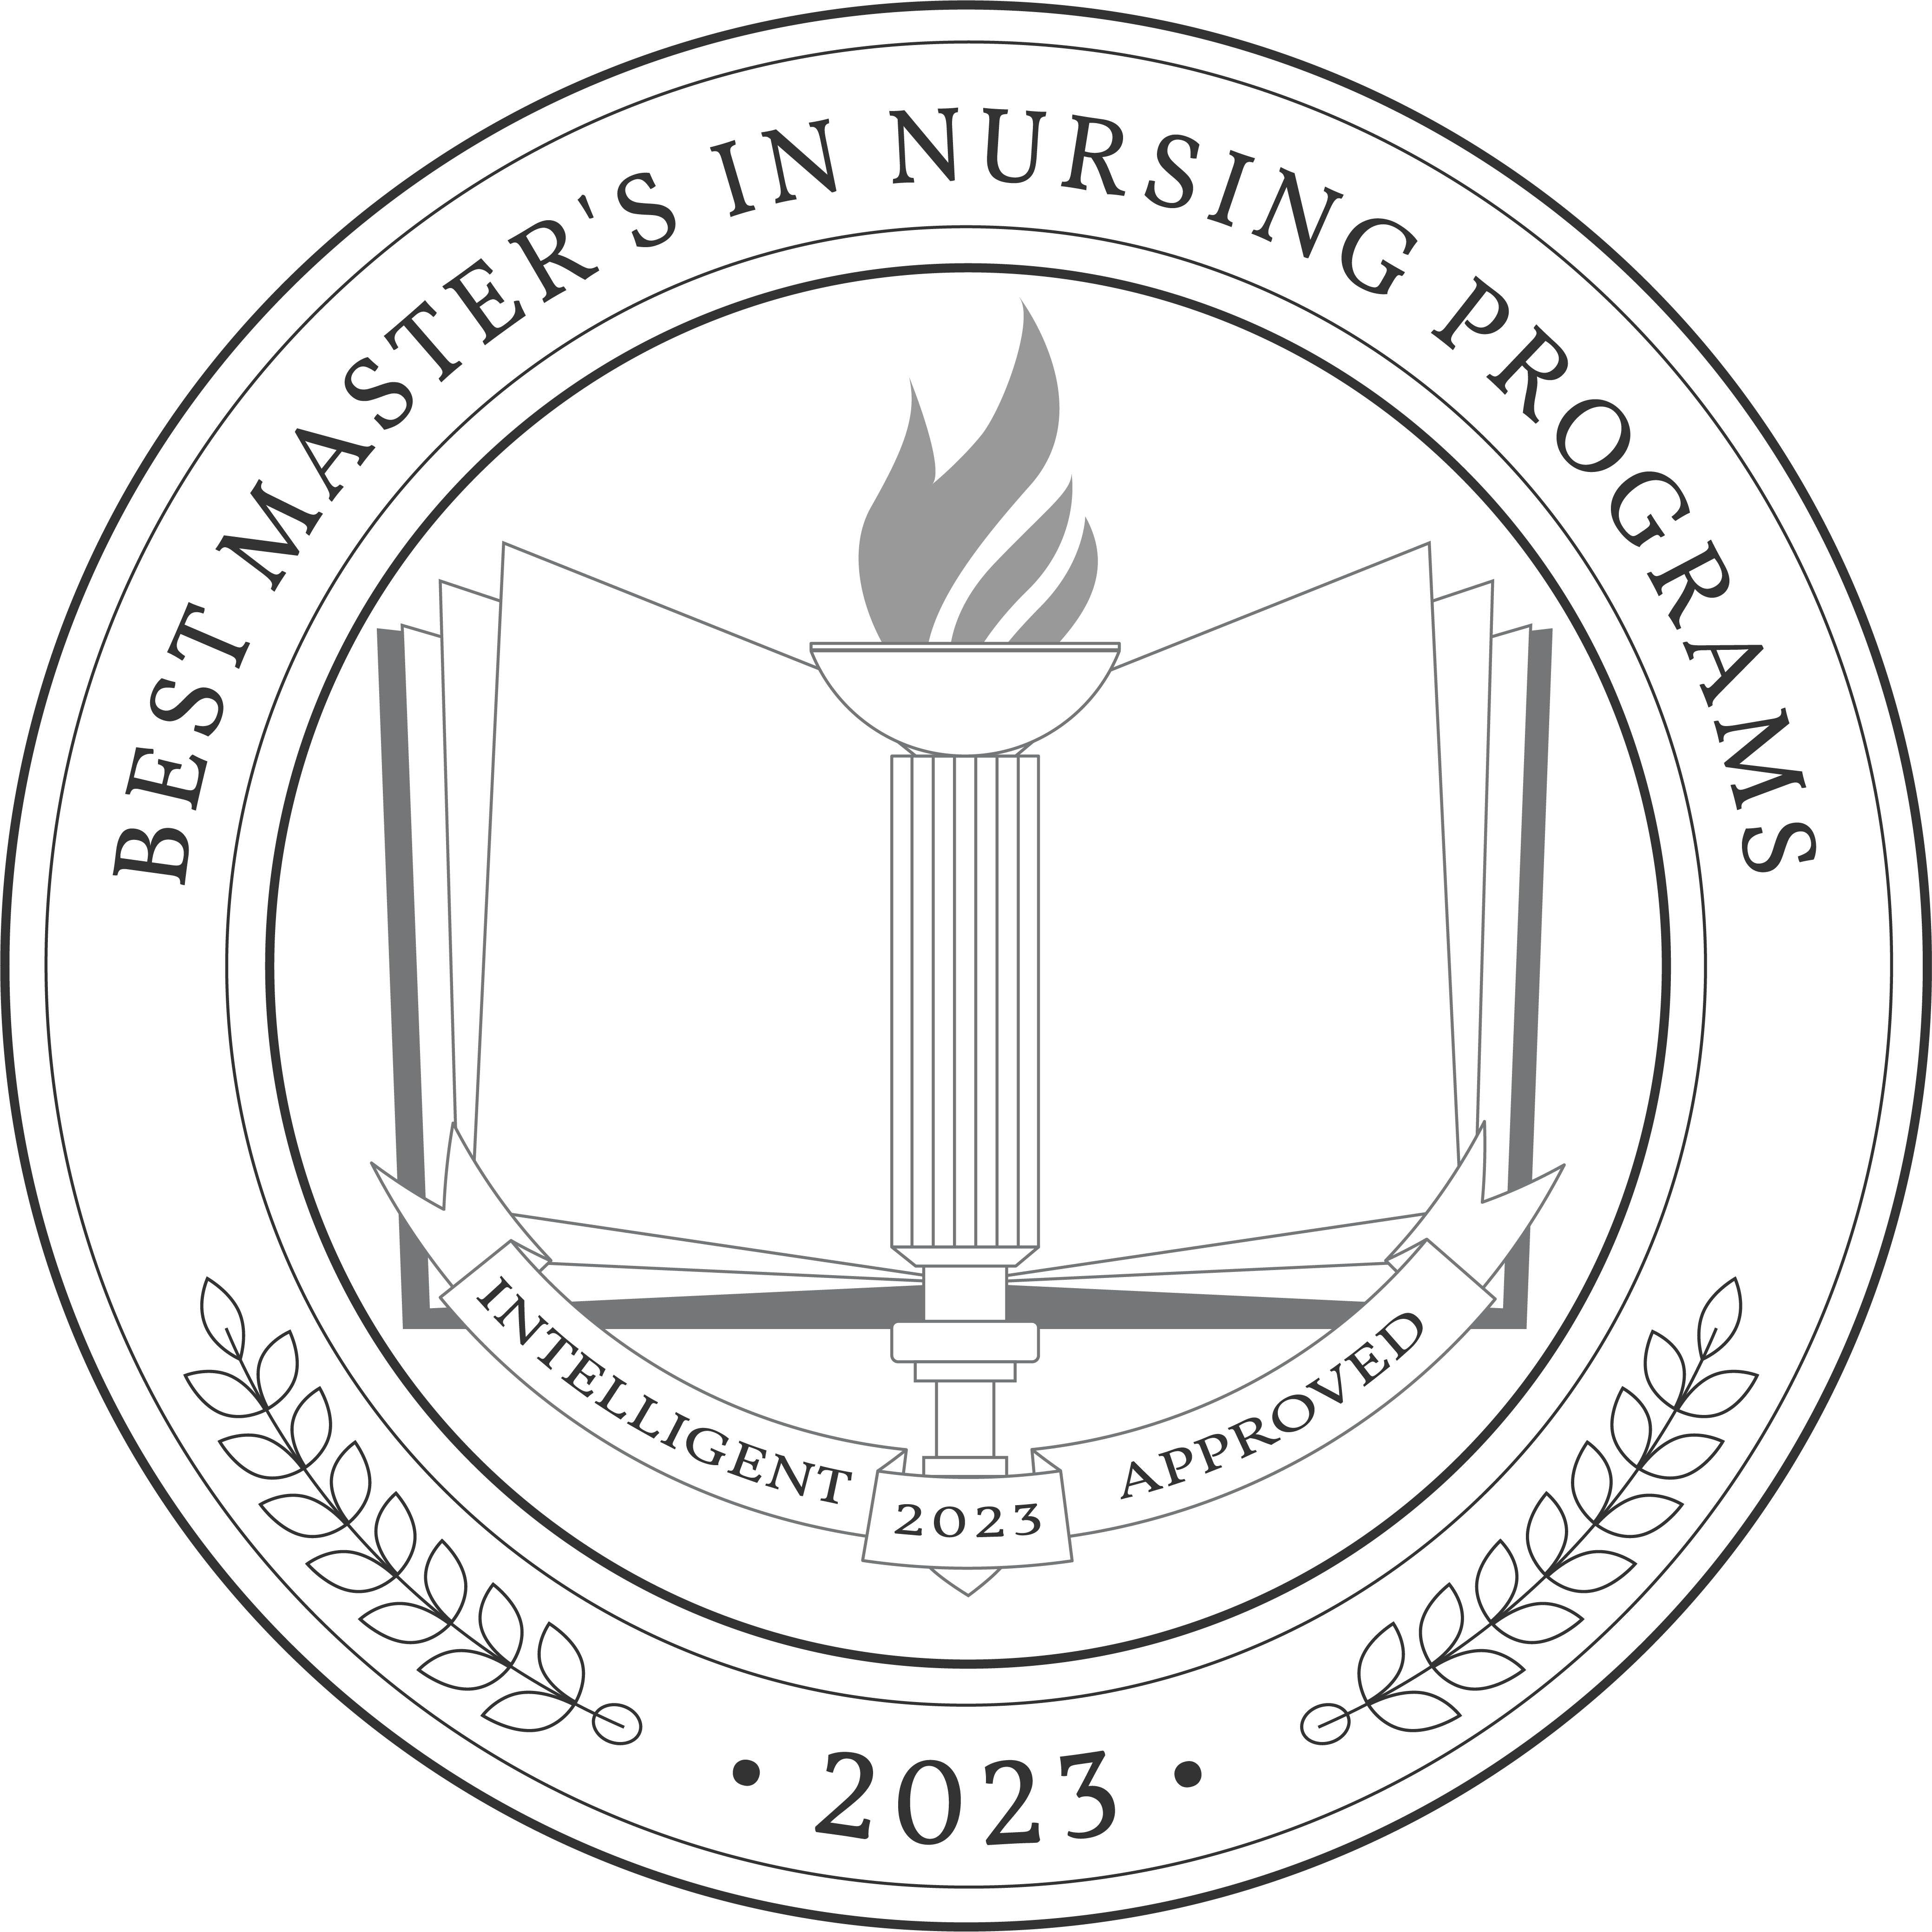 Best Master's in Nursing Programs 2023